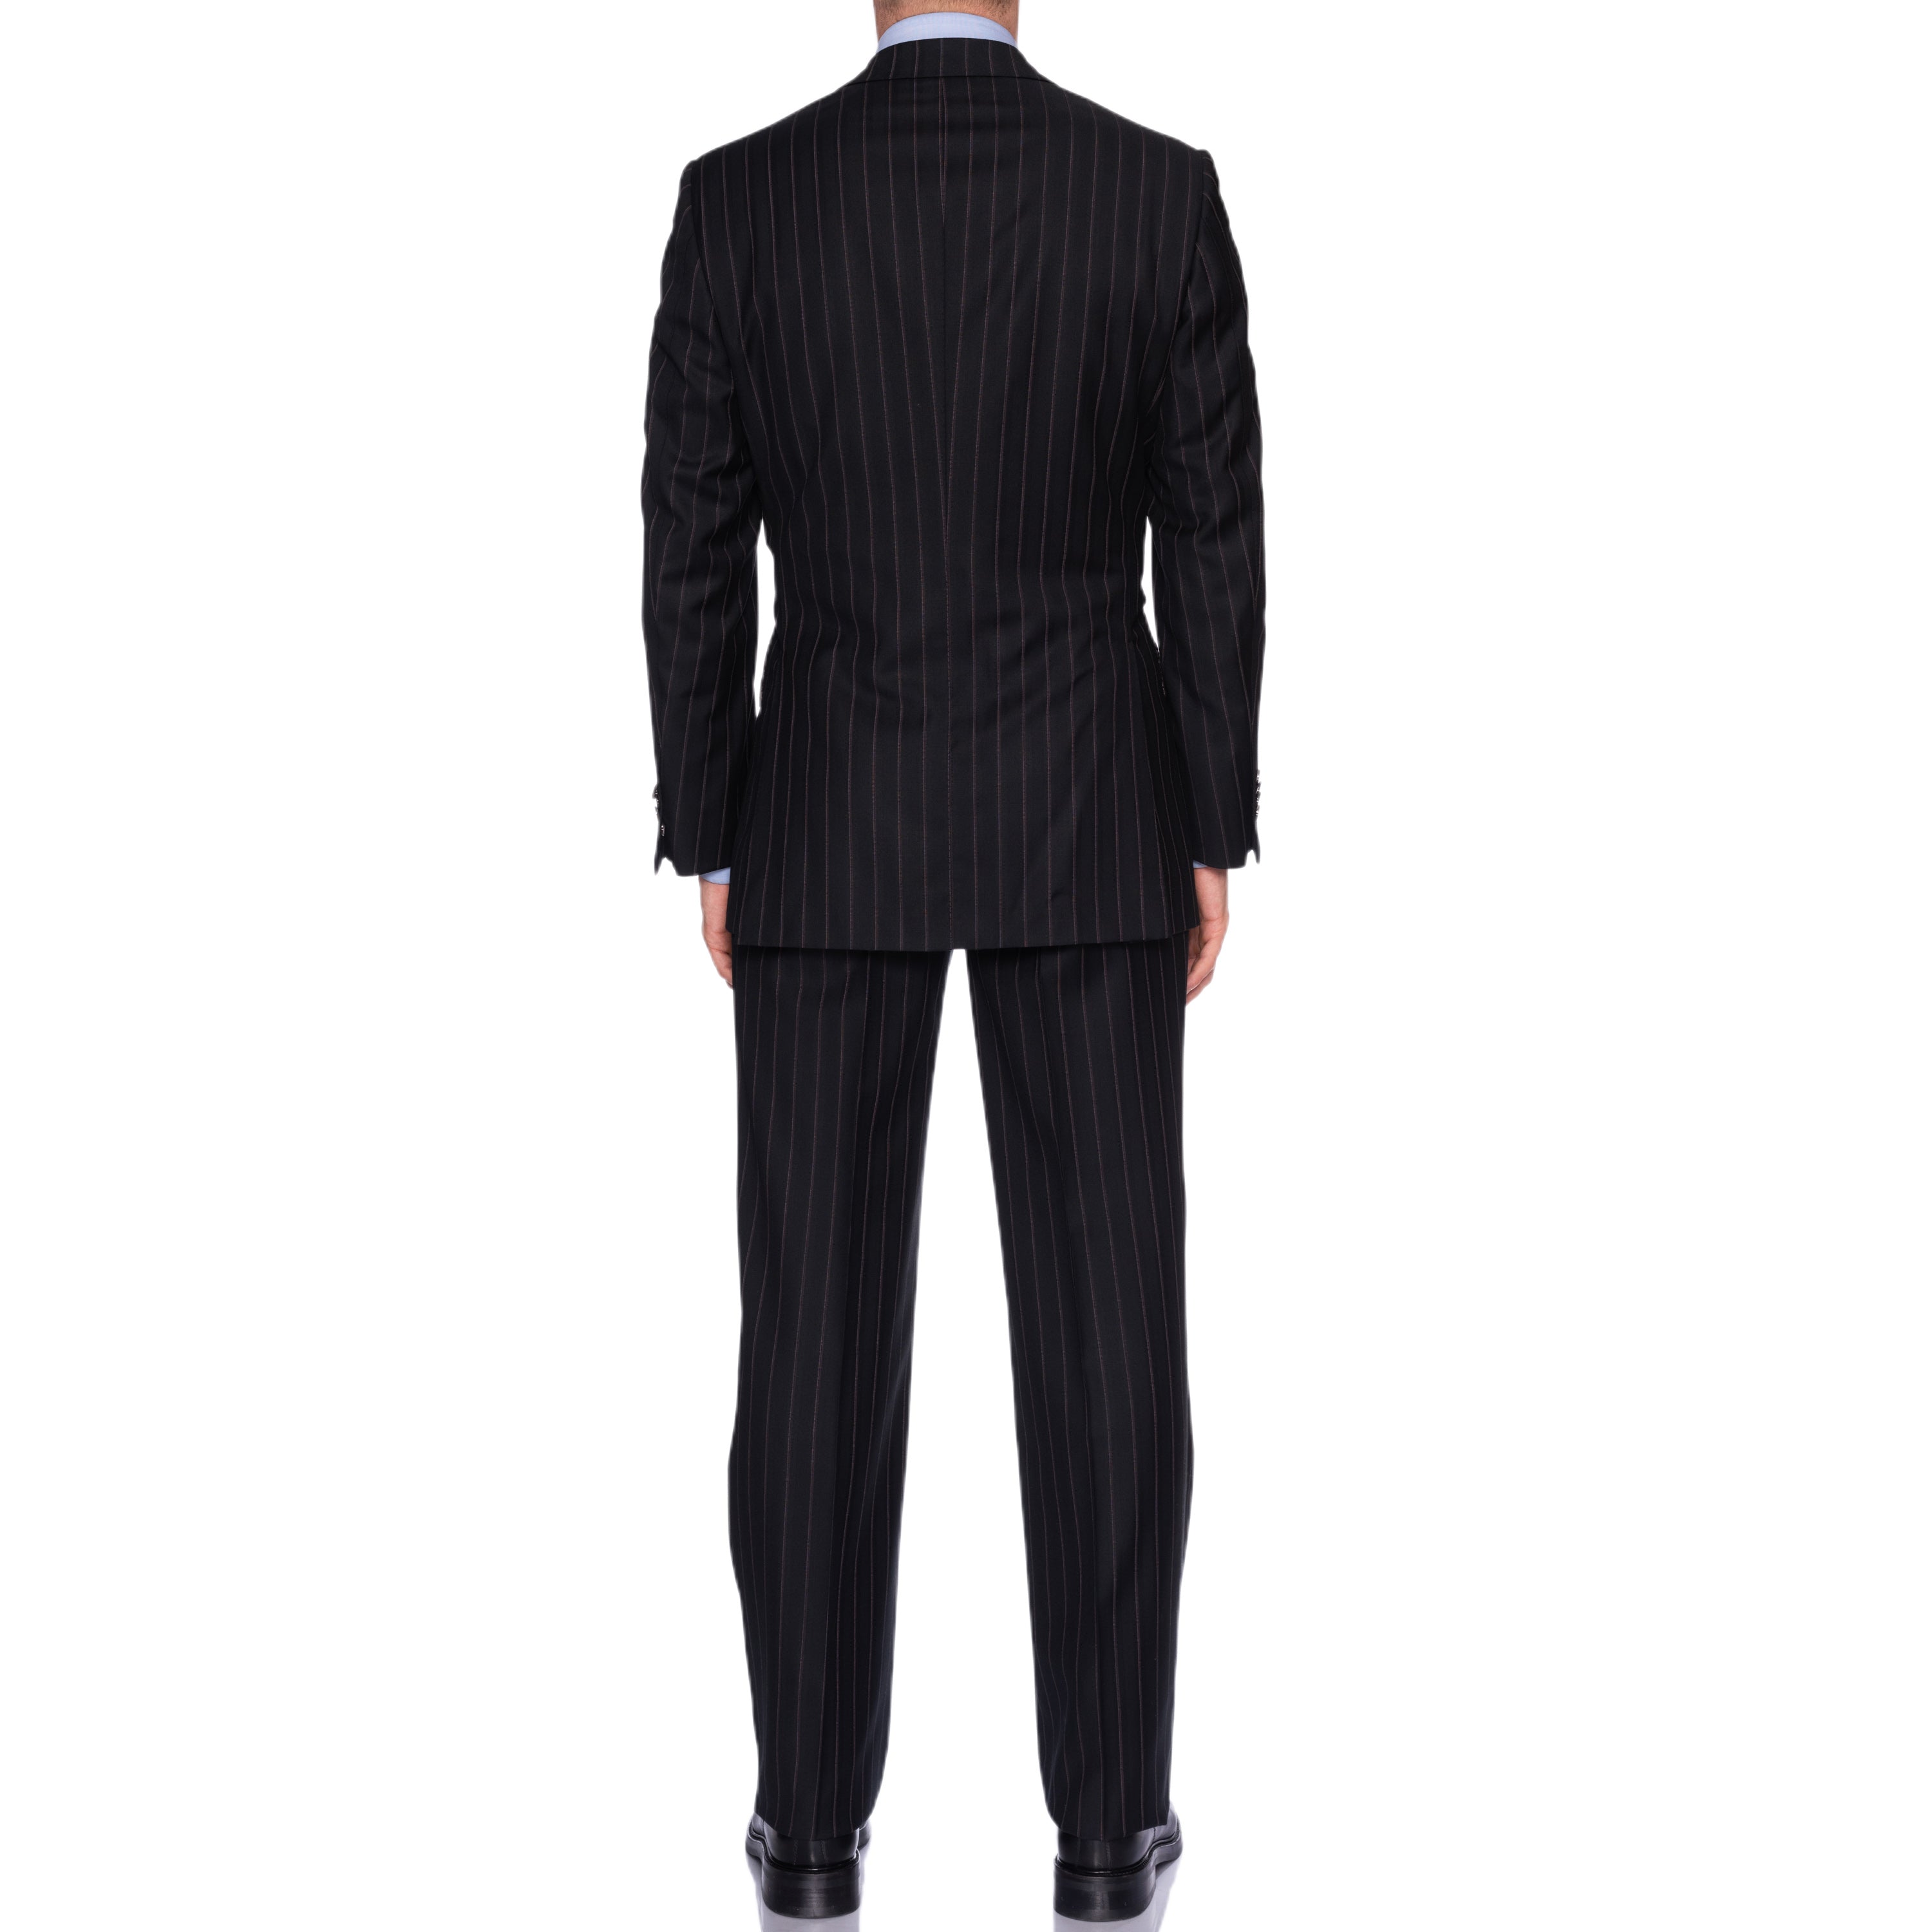 SARTORIA CASTANGIA Black Striped Wool Super 150's Suit EU 48 NEW US 38 CASTANGIA